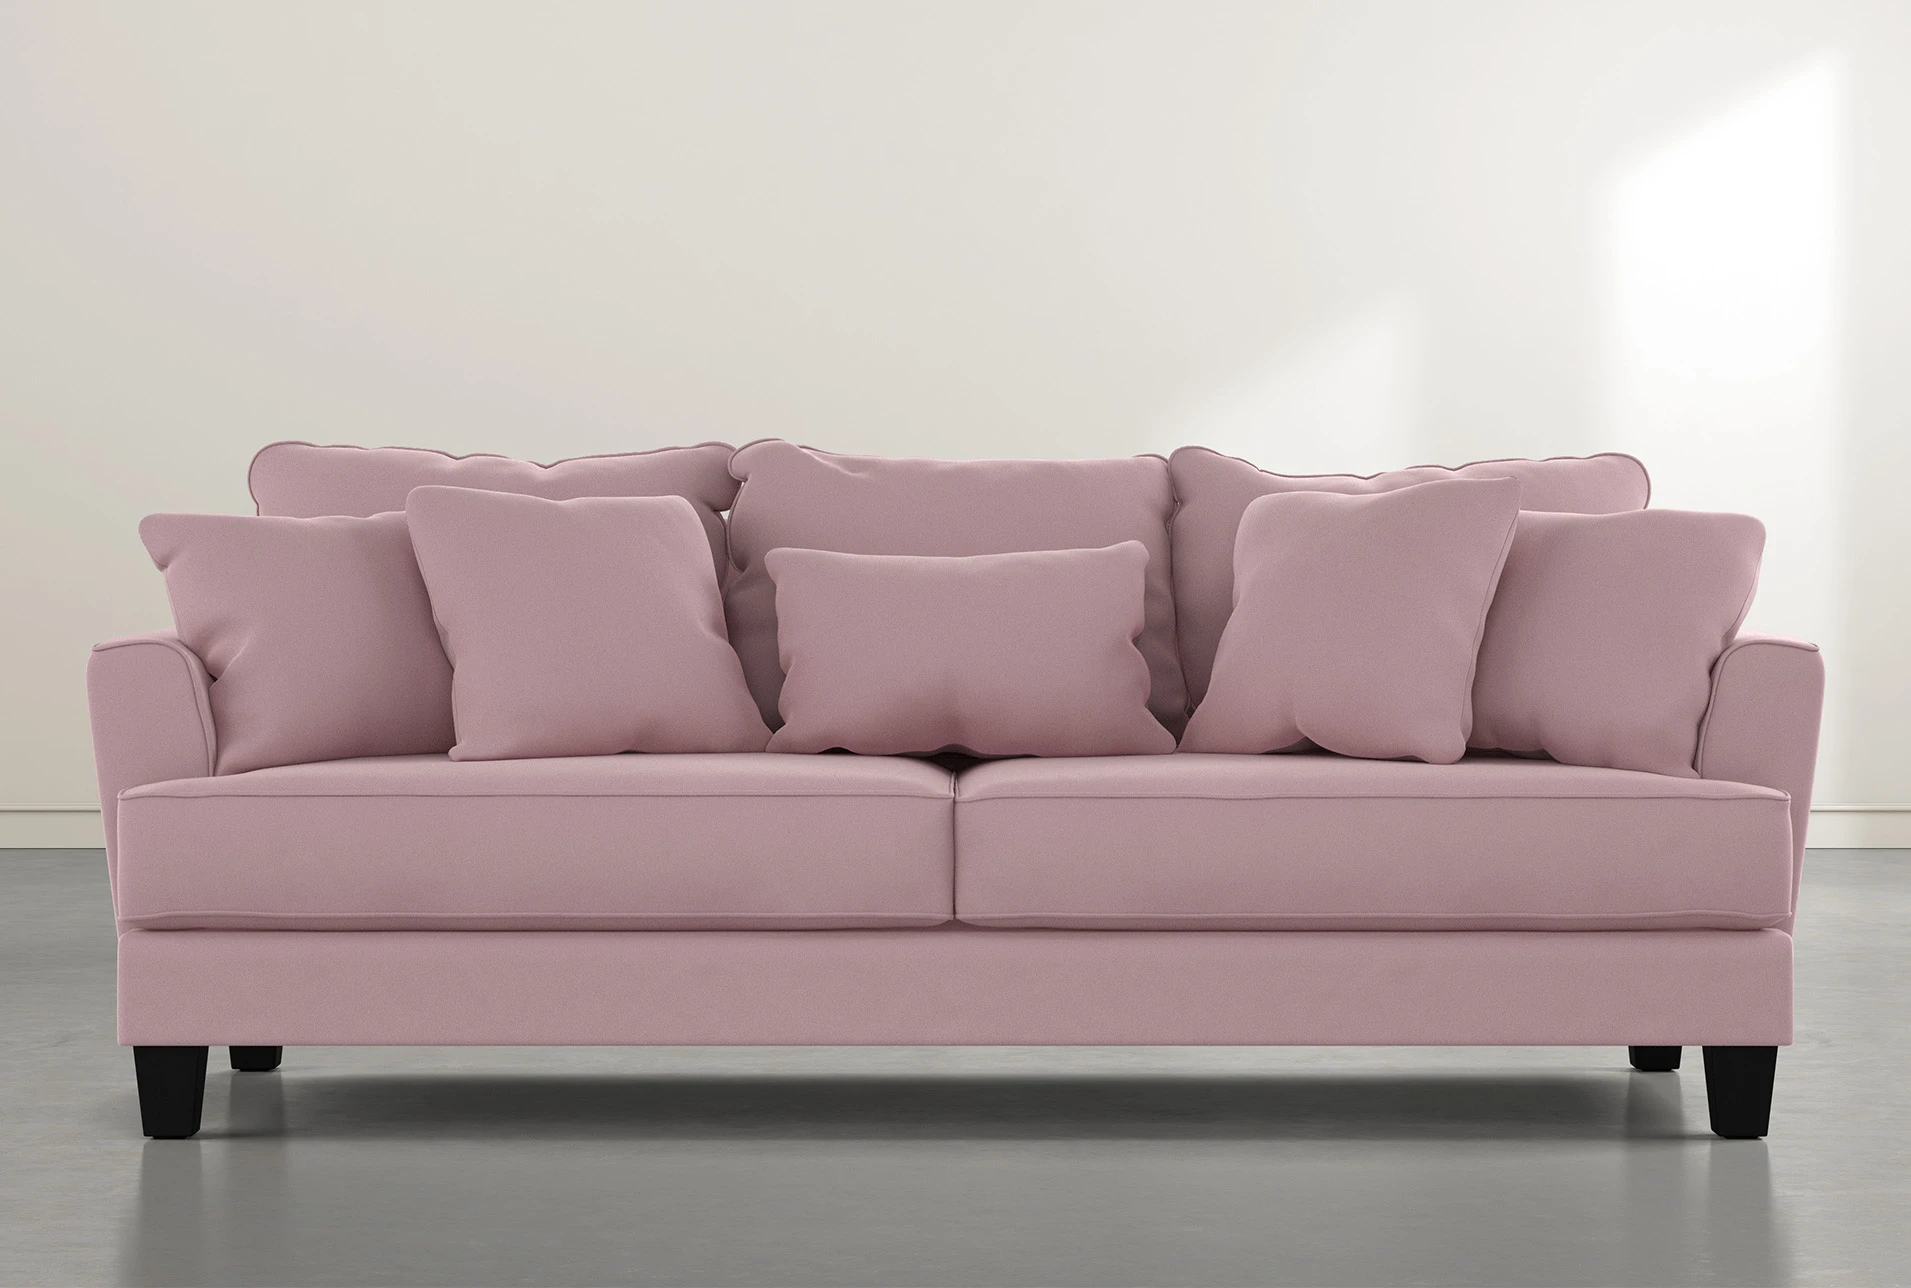 kids pink sofa bed